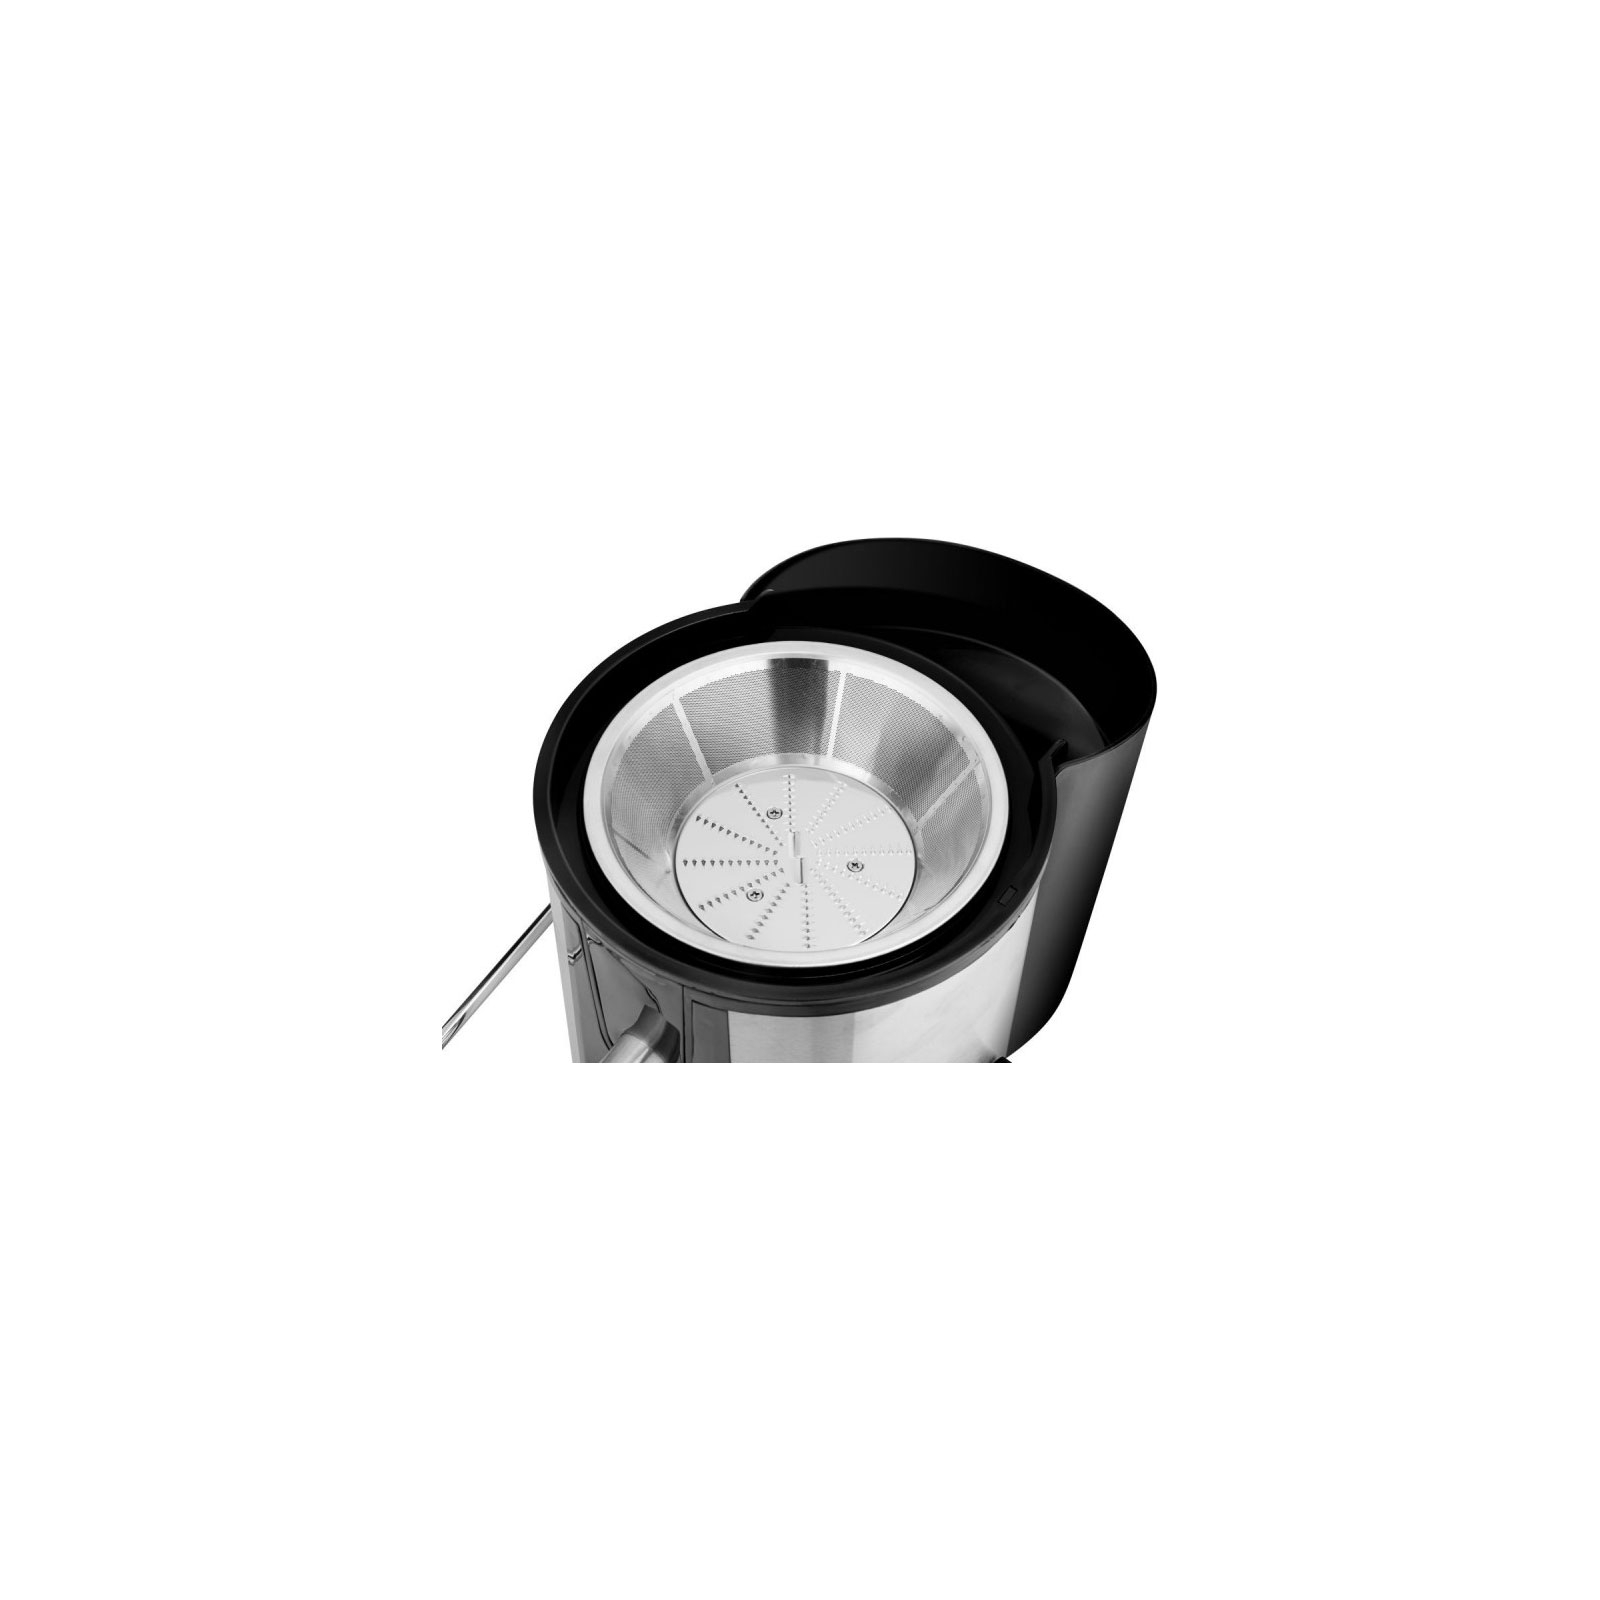 Соковыжималка Ufesa LC5750 DELUX (71104550) изображение 3